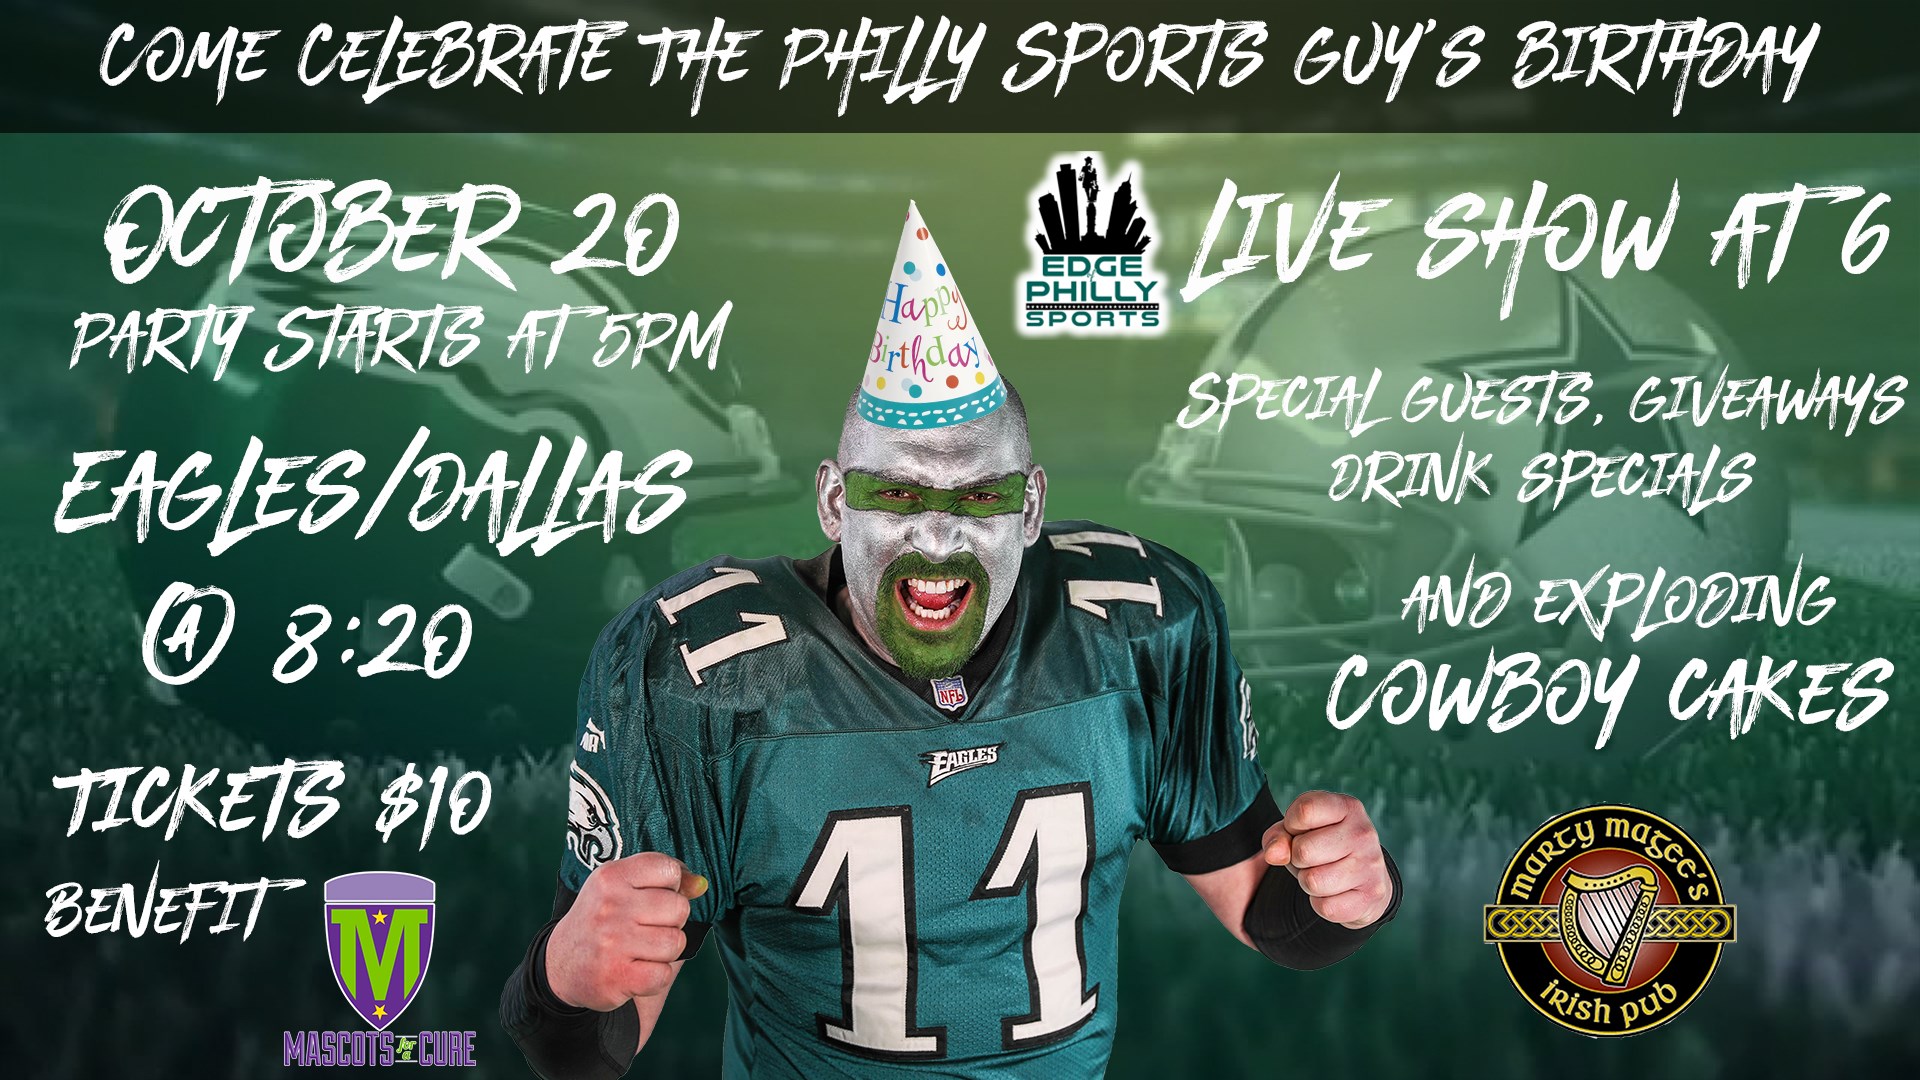 The Philly Sport Guy's Birthday